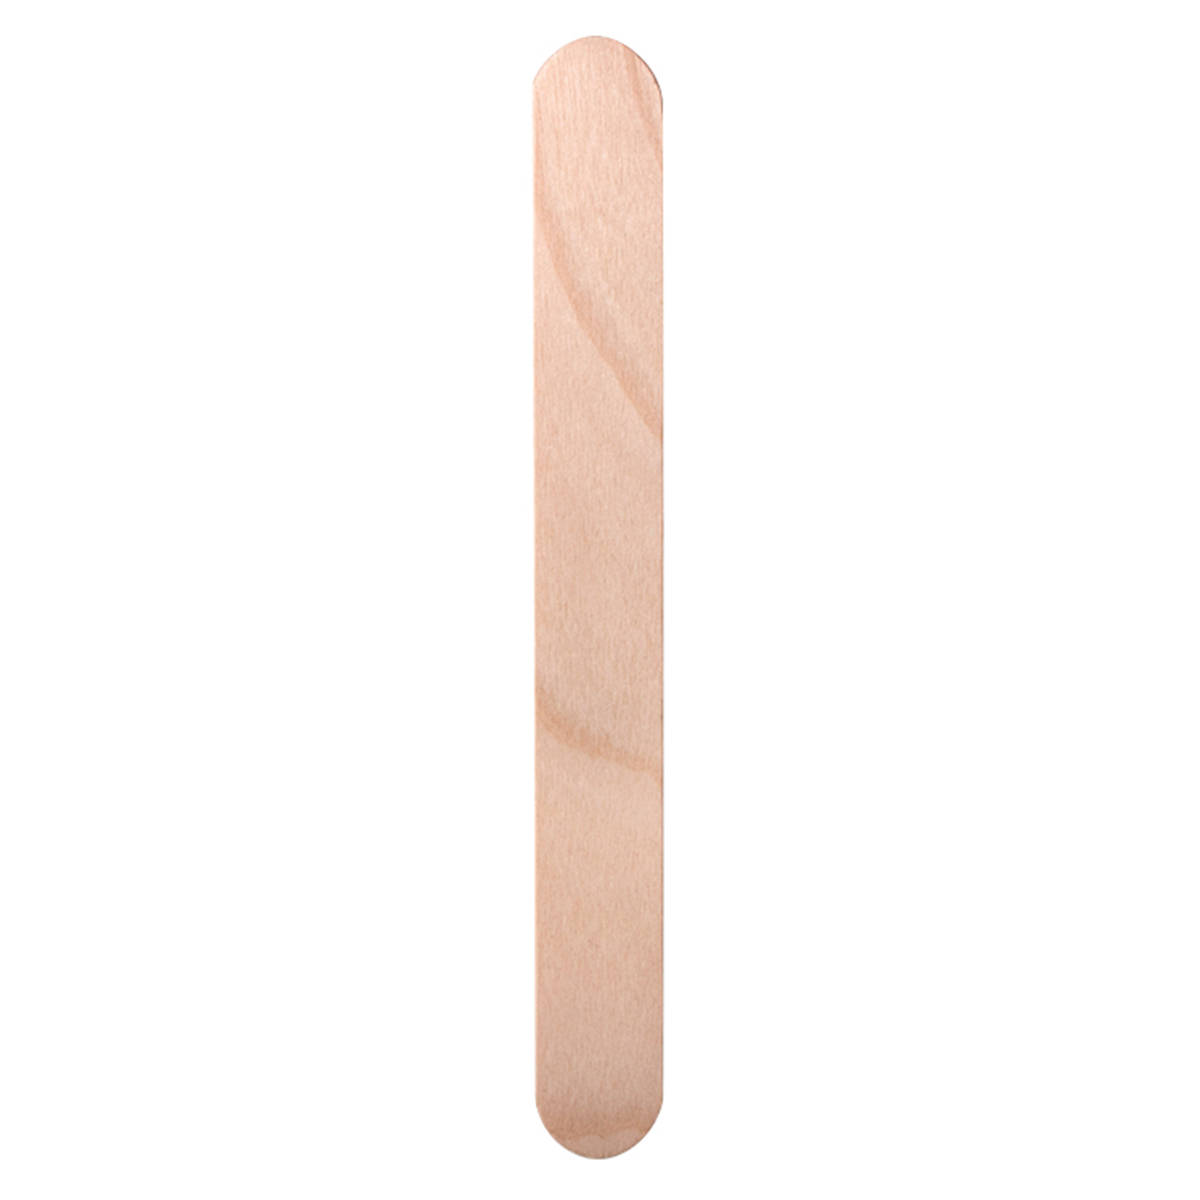 Single wooden spatula